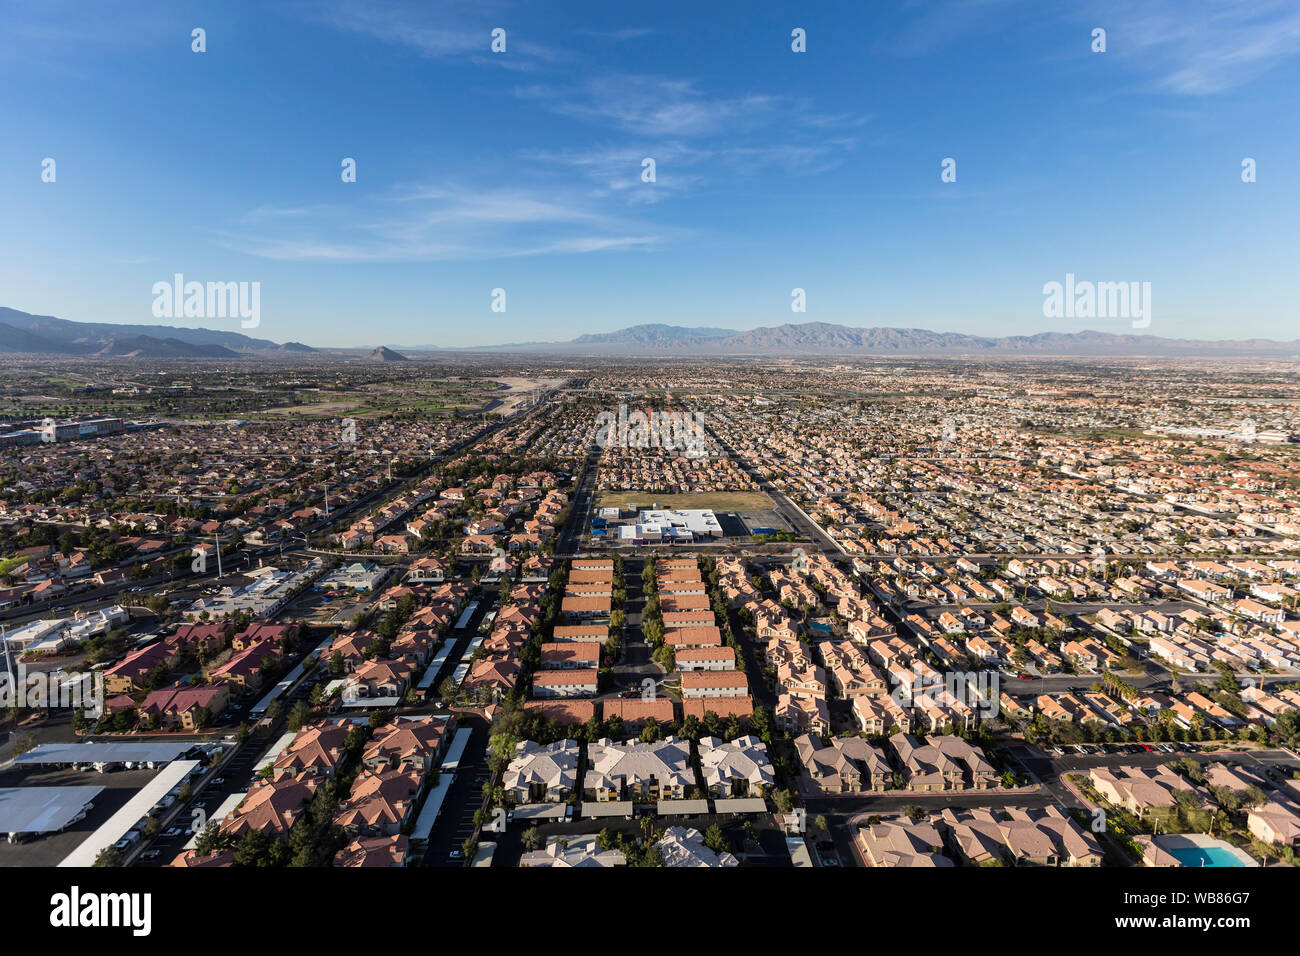 Aerial view of the suburban neighborhoods in fast growing Las Vegas, Nevada. Stock Photo